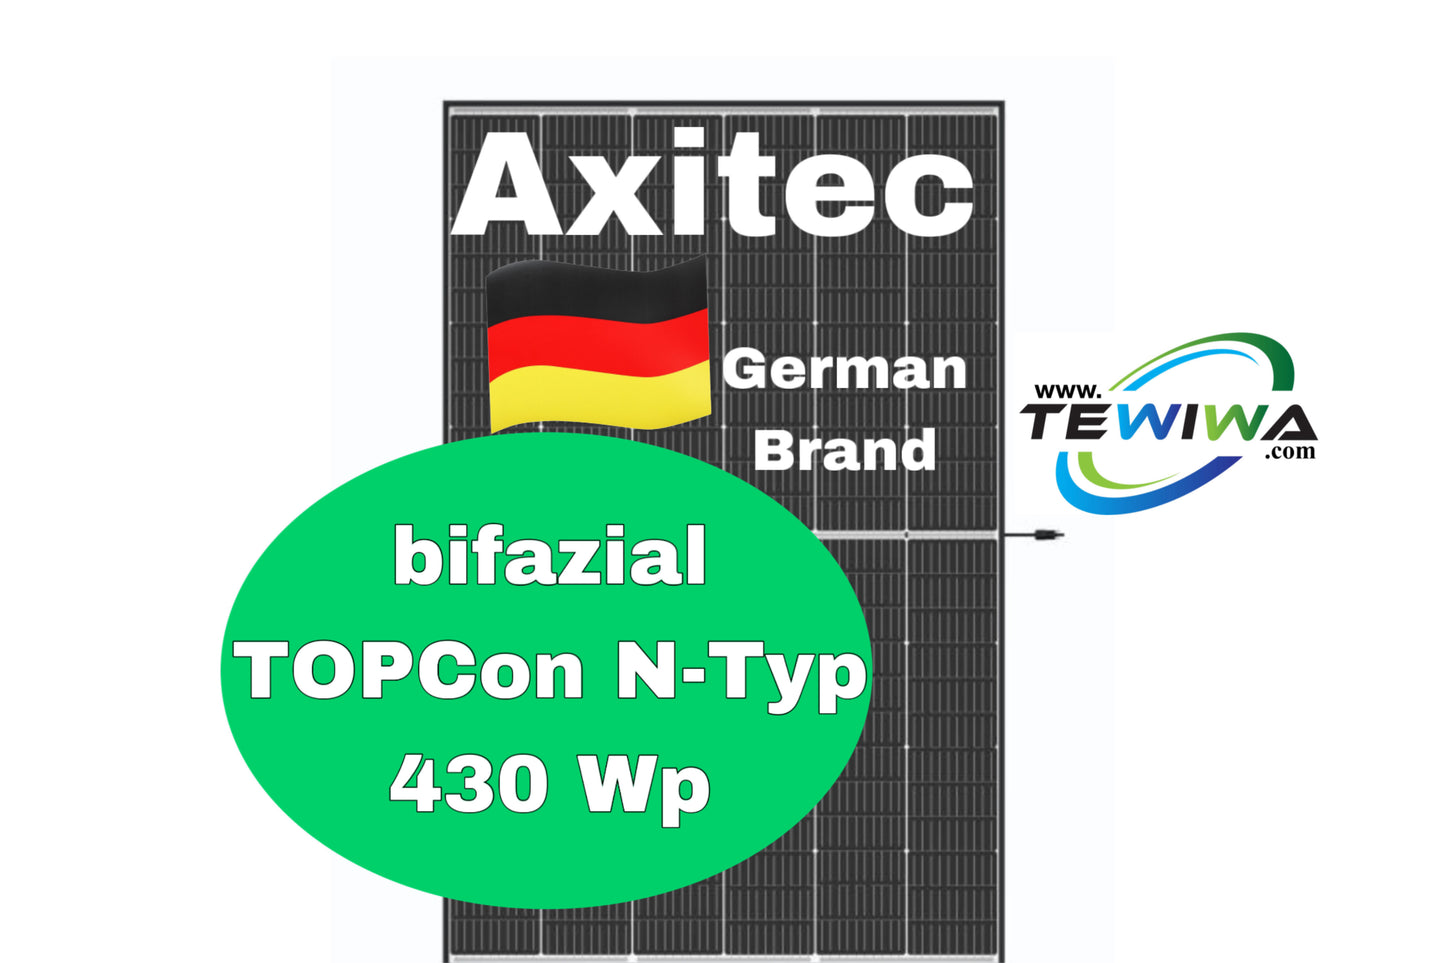 Axitec Glas-Glas AXIworldbiperfect GXXL WB 430 Wp TOPcon N-Typ bifazial black frame